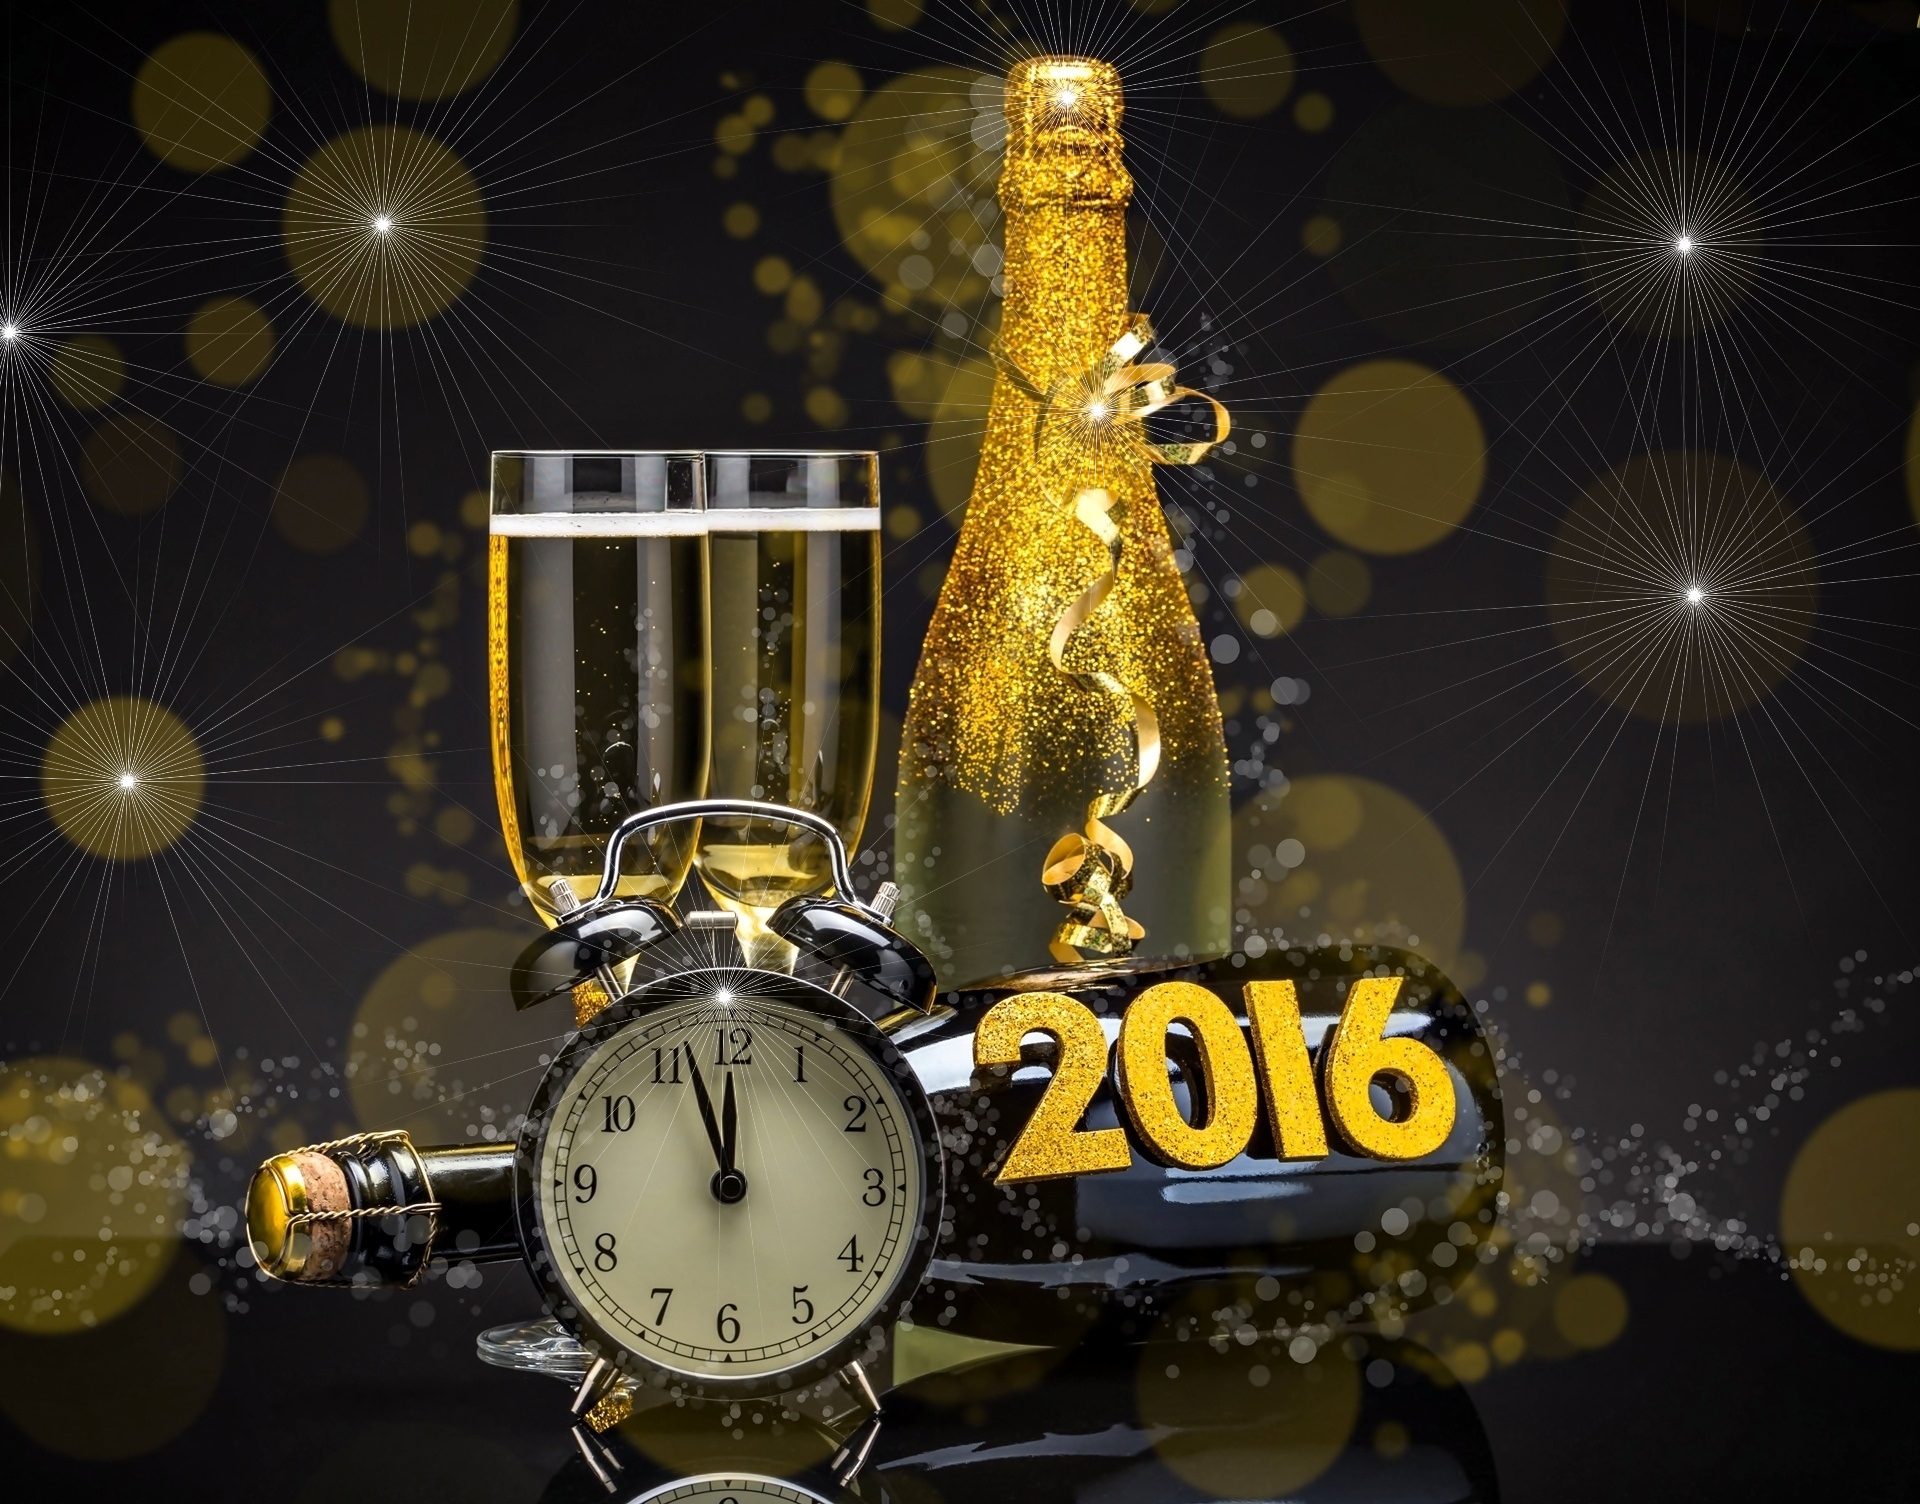 245090_rok-nowy-szampan-zegar-kieliszki-2016-butelka